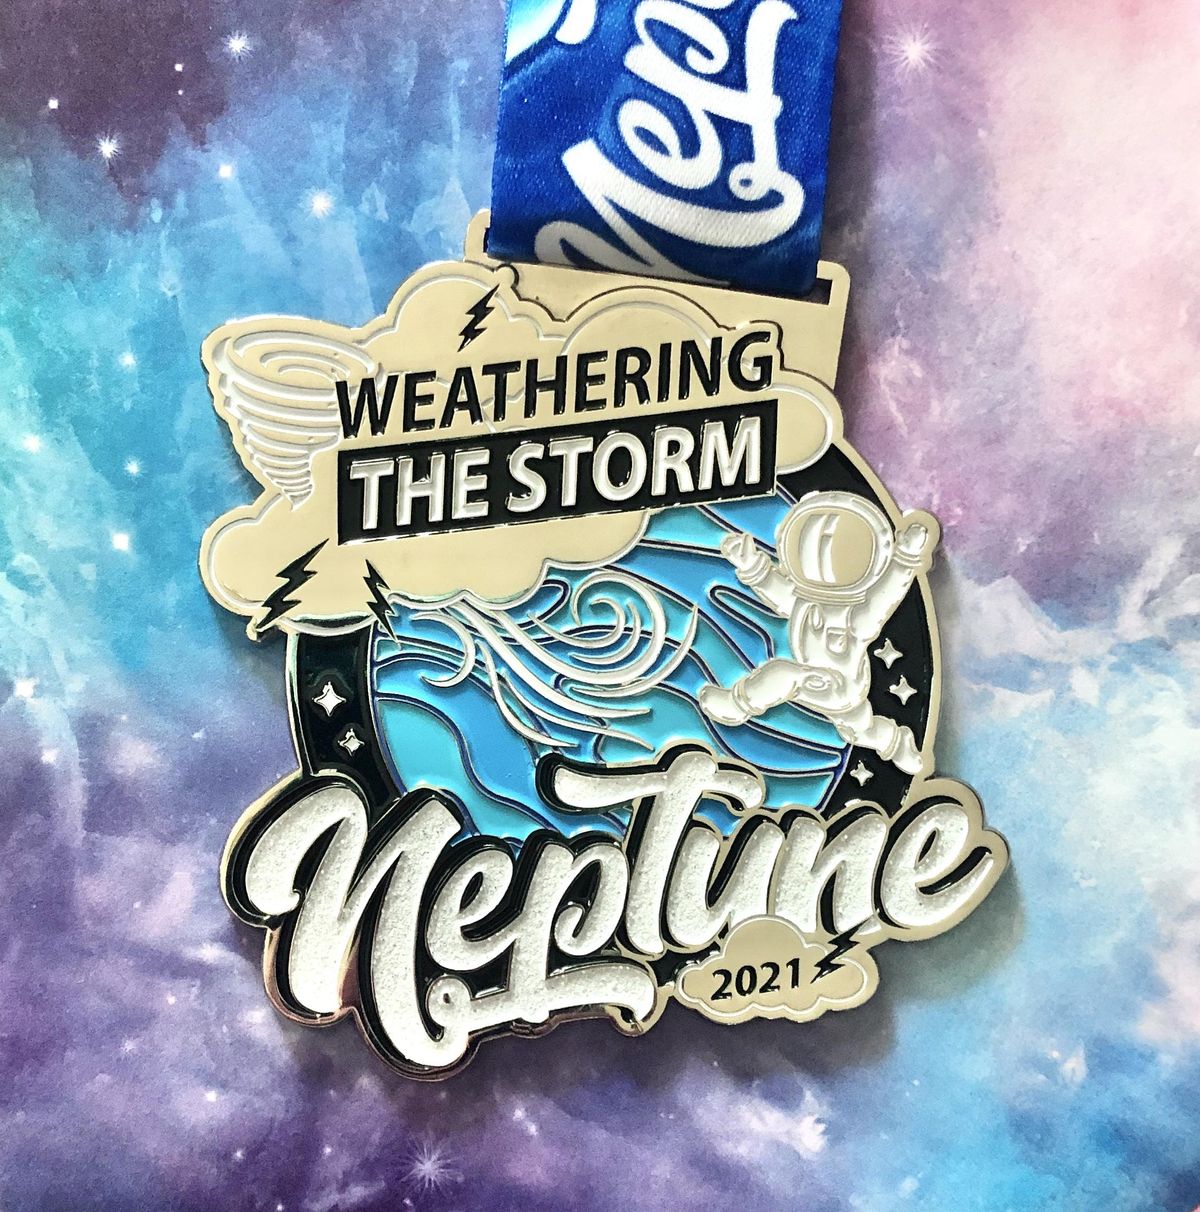 FREE! Neptune Weathering the Storm - Run and Walk Challenge  - New York